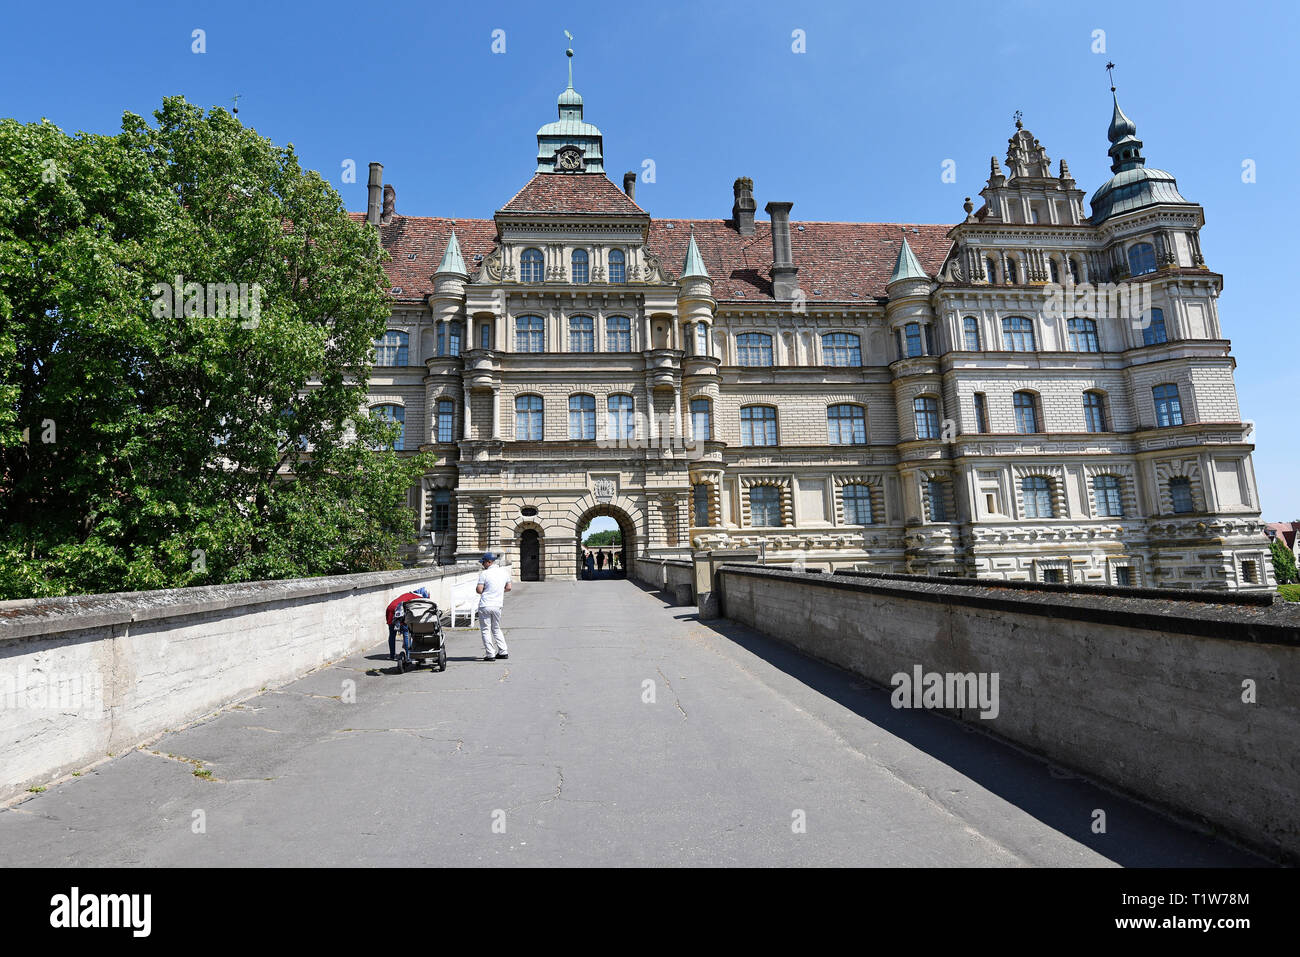 Castello, edificio rinascimentale, Guestrow, Meclemburgo-Pomerania, Germania Foto Stock